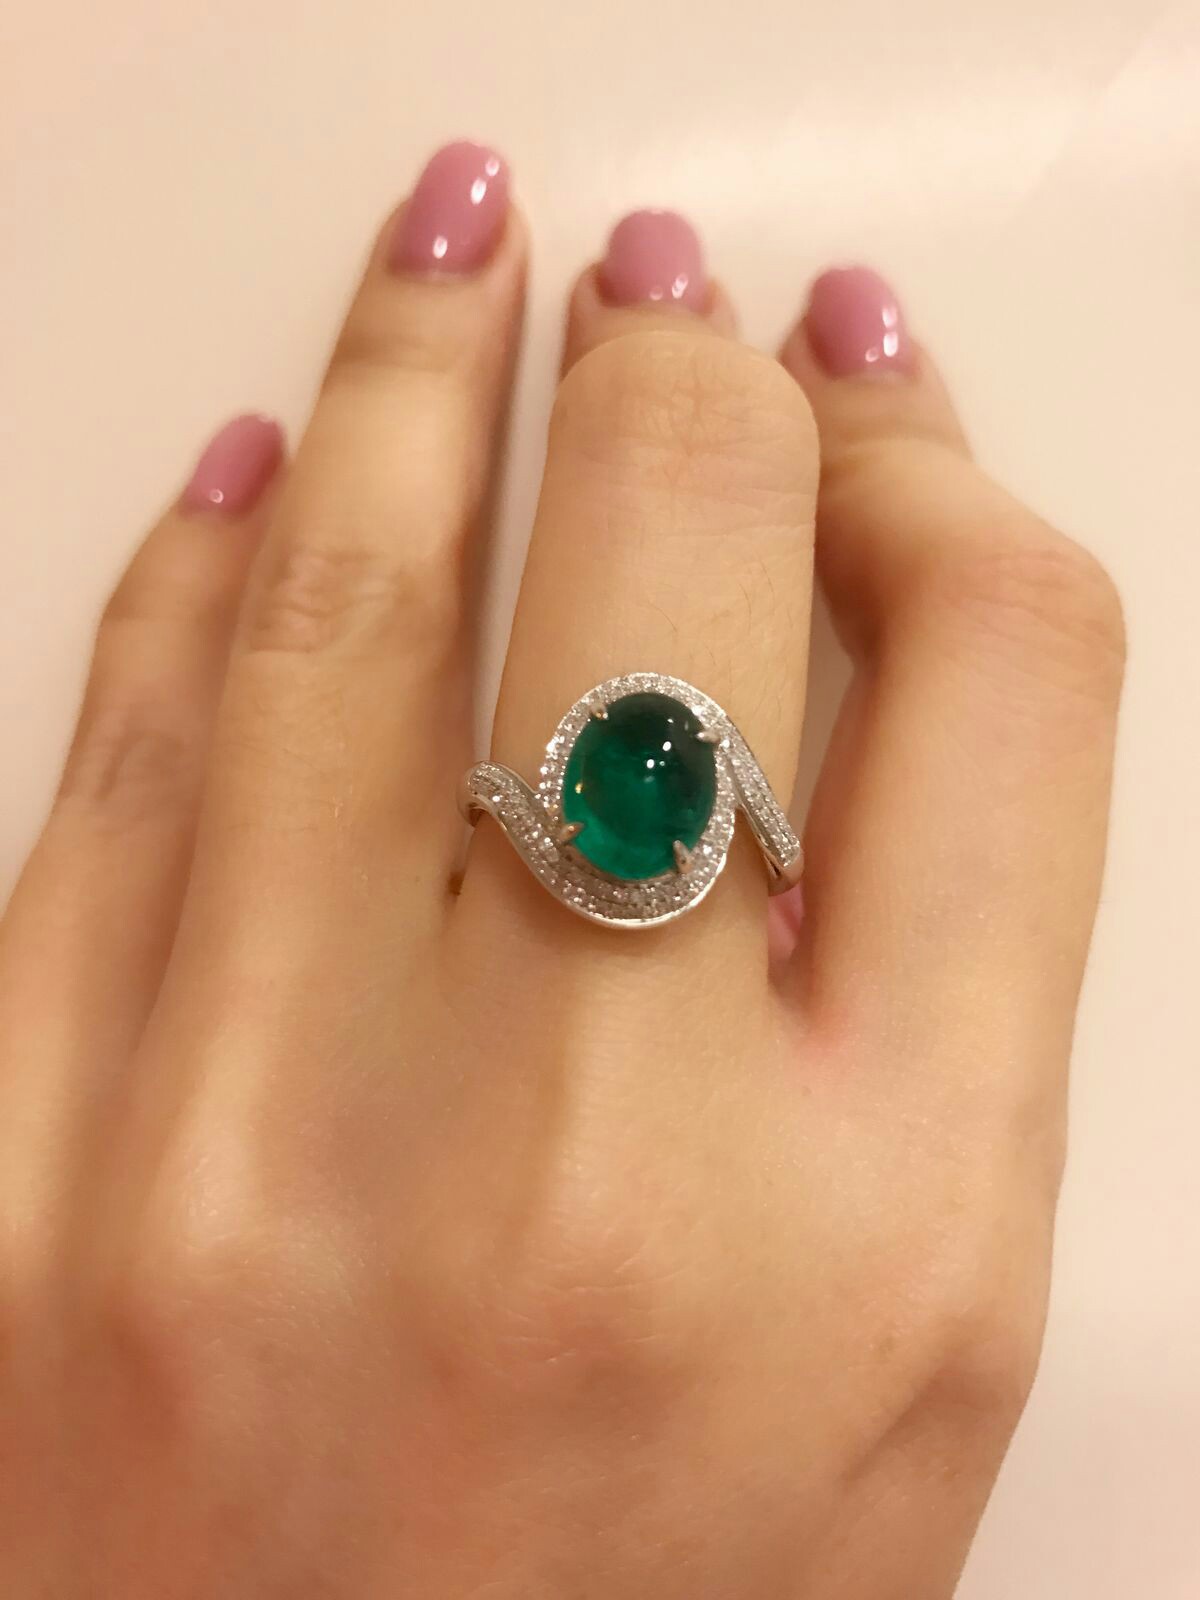 A Wonderful Cabochon Cut Colombian Emerald and Diamond Ring